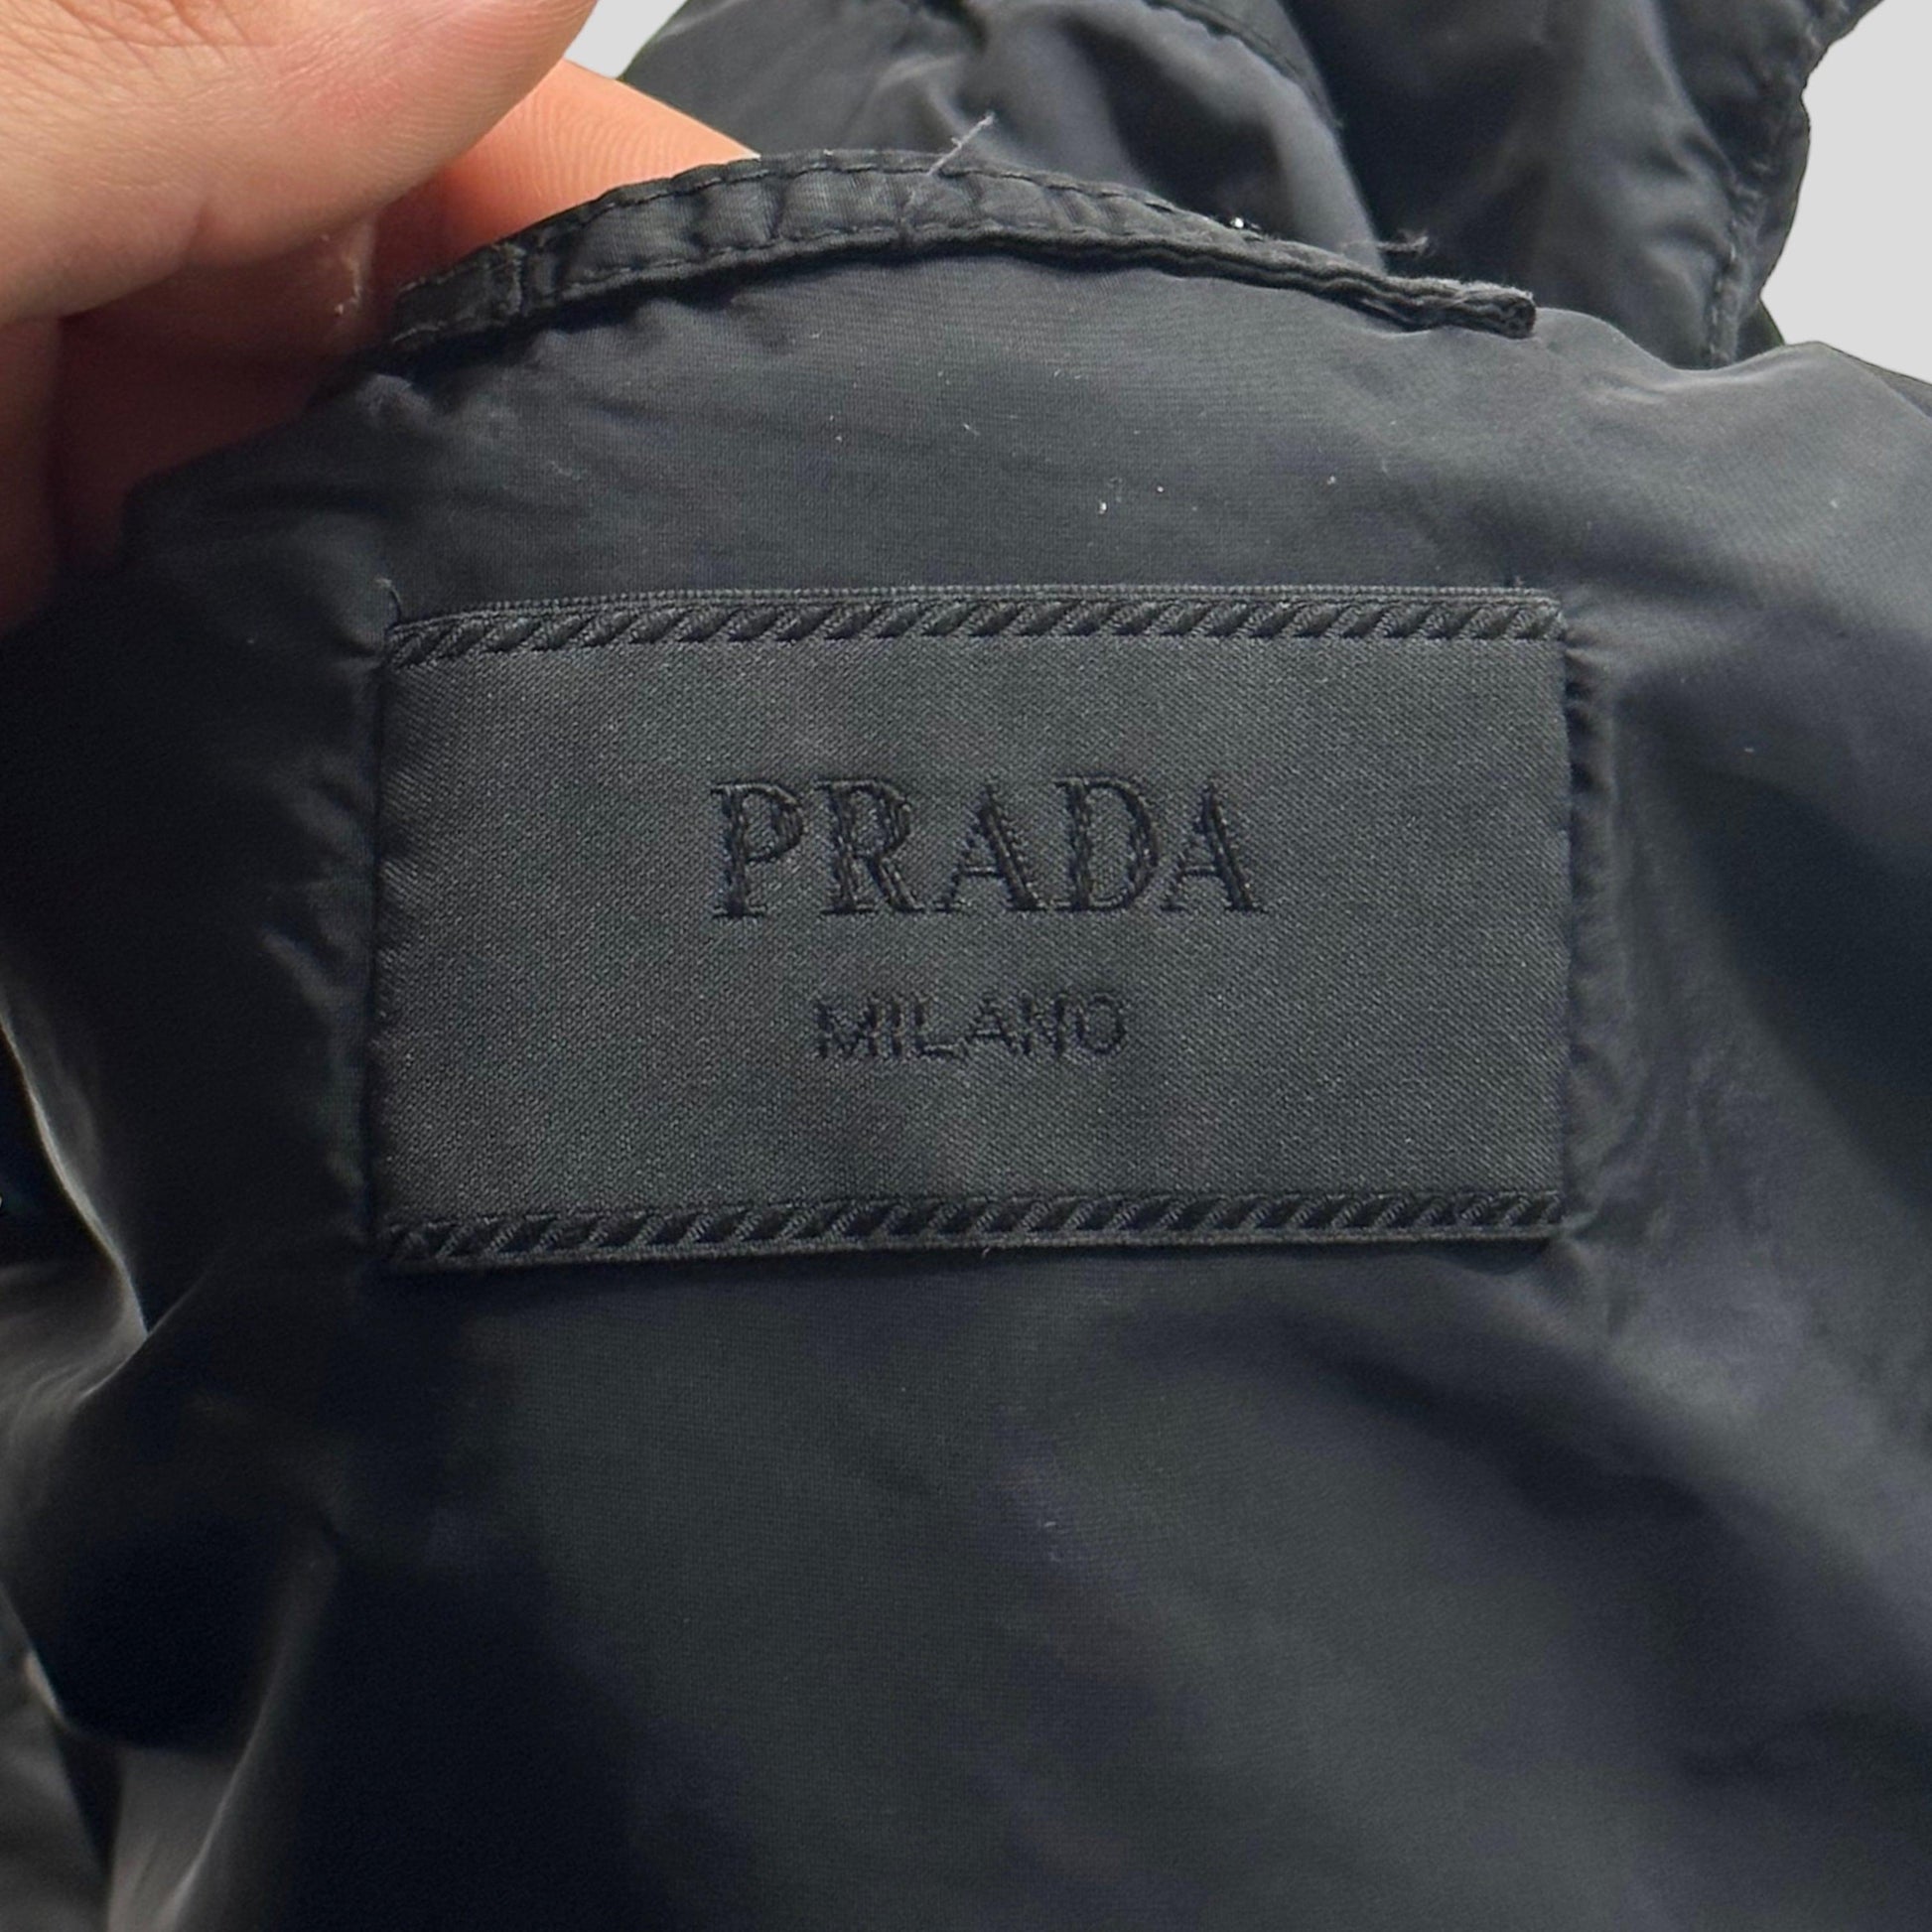 Prada Milano 2018 Laminated Nylon Padded Jacket - IT56 - Known Source